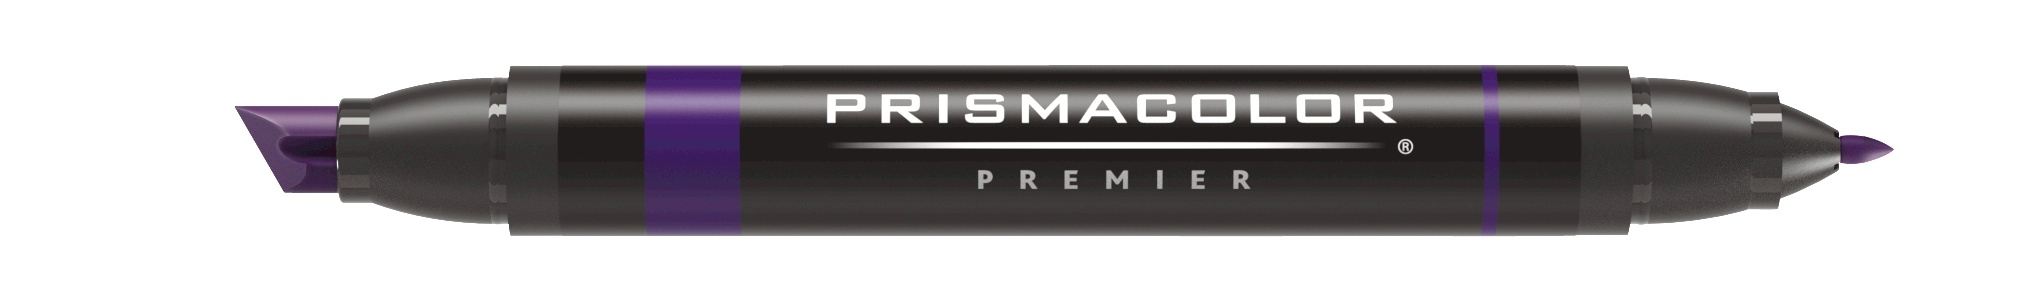 Prismacolor Premier Double-Ended Art Marker, Brush-Fine, Ash Gray - image 2 of 2